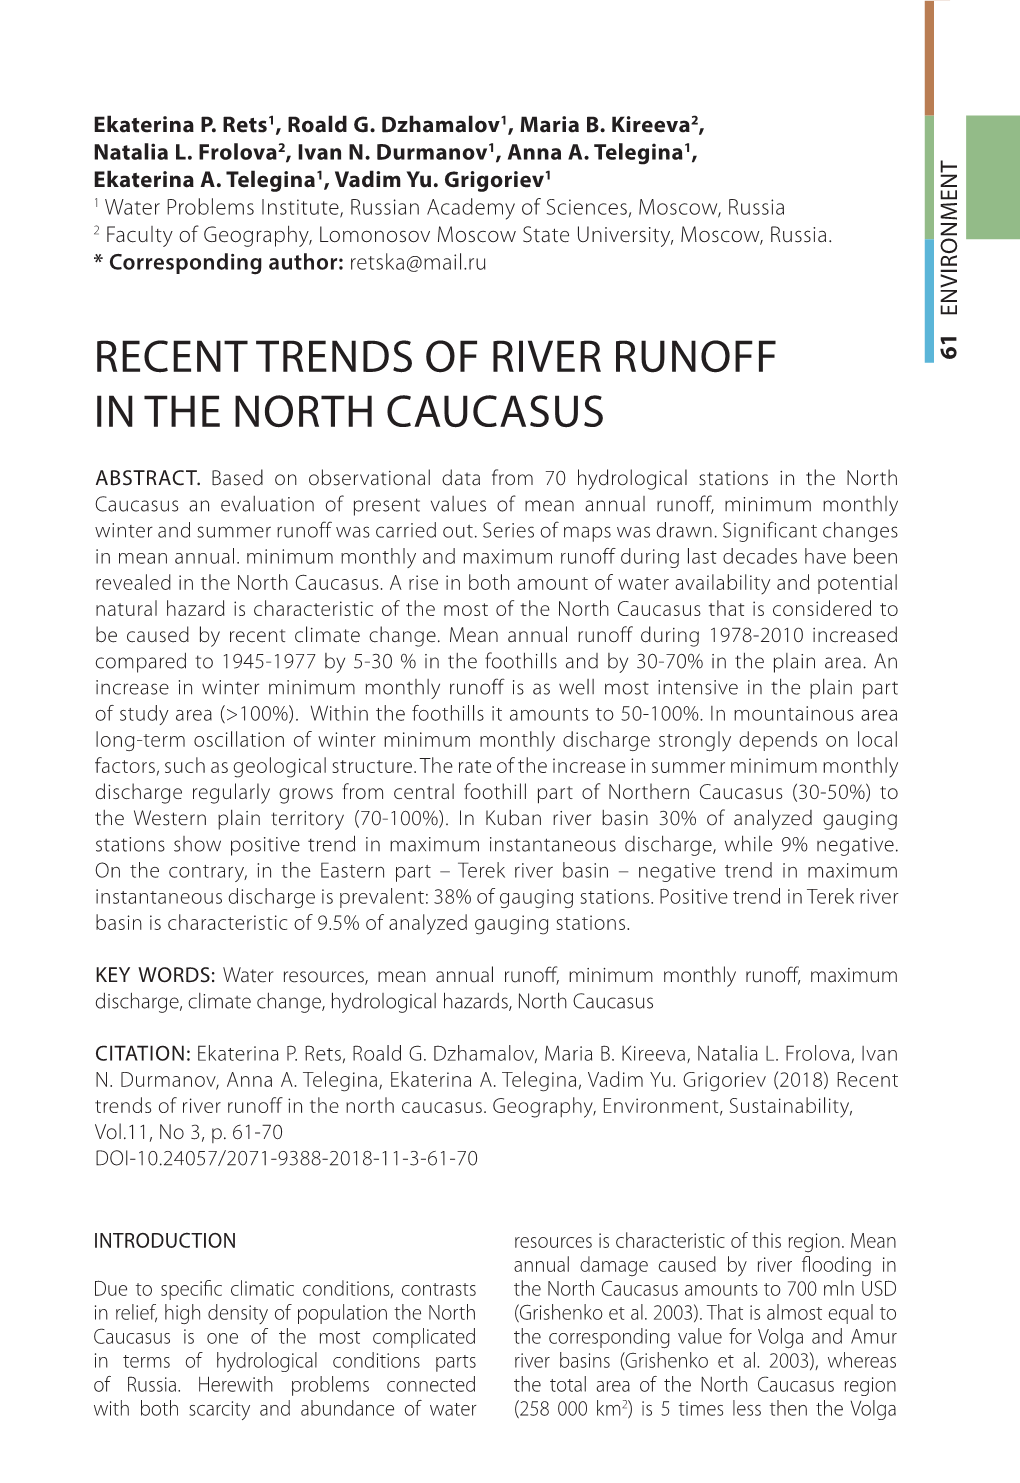 RECENT TRENDS of RIVER Runoff in the NORTH CAUCASUS